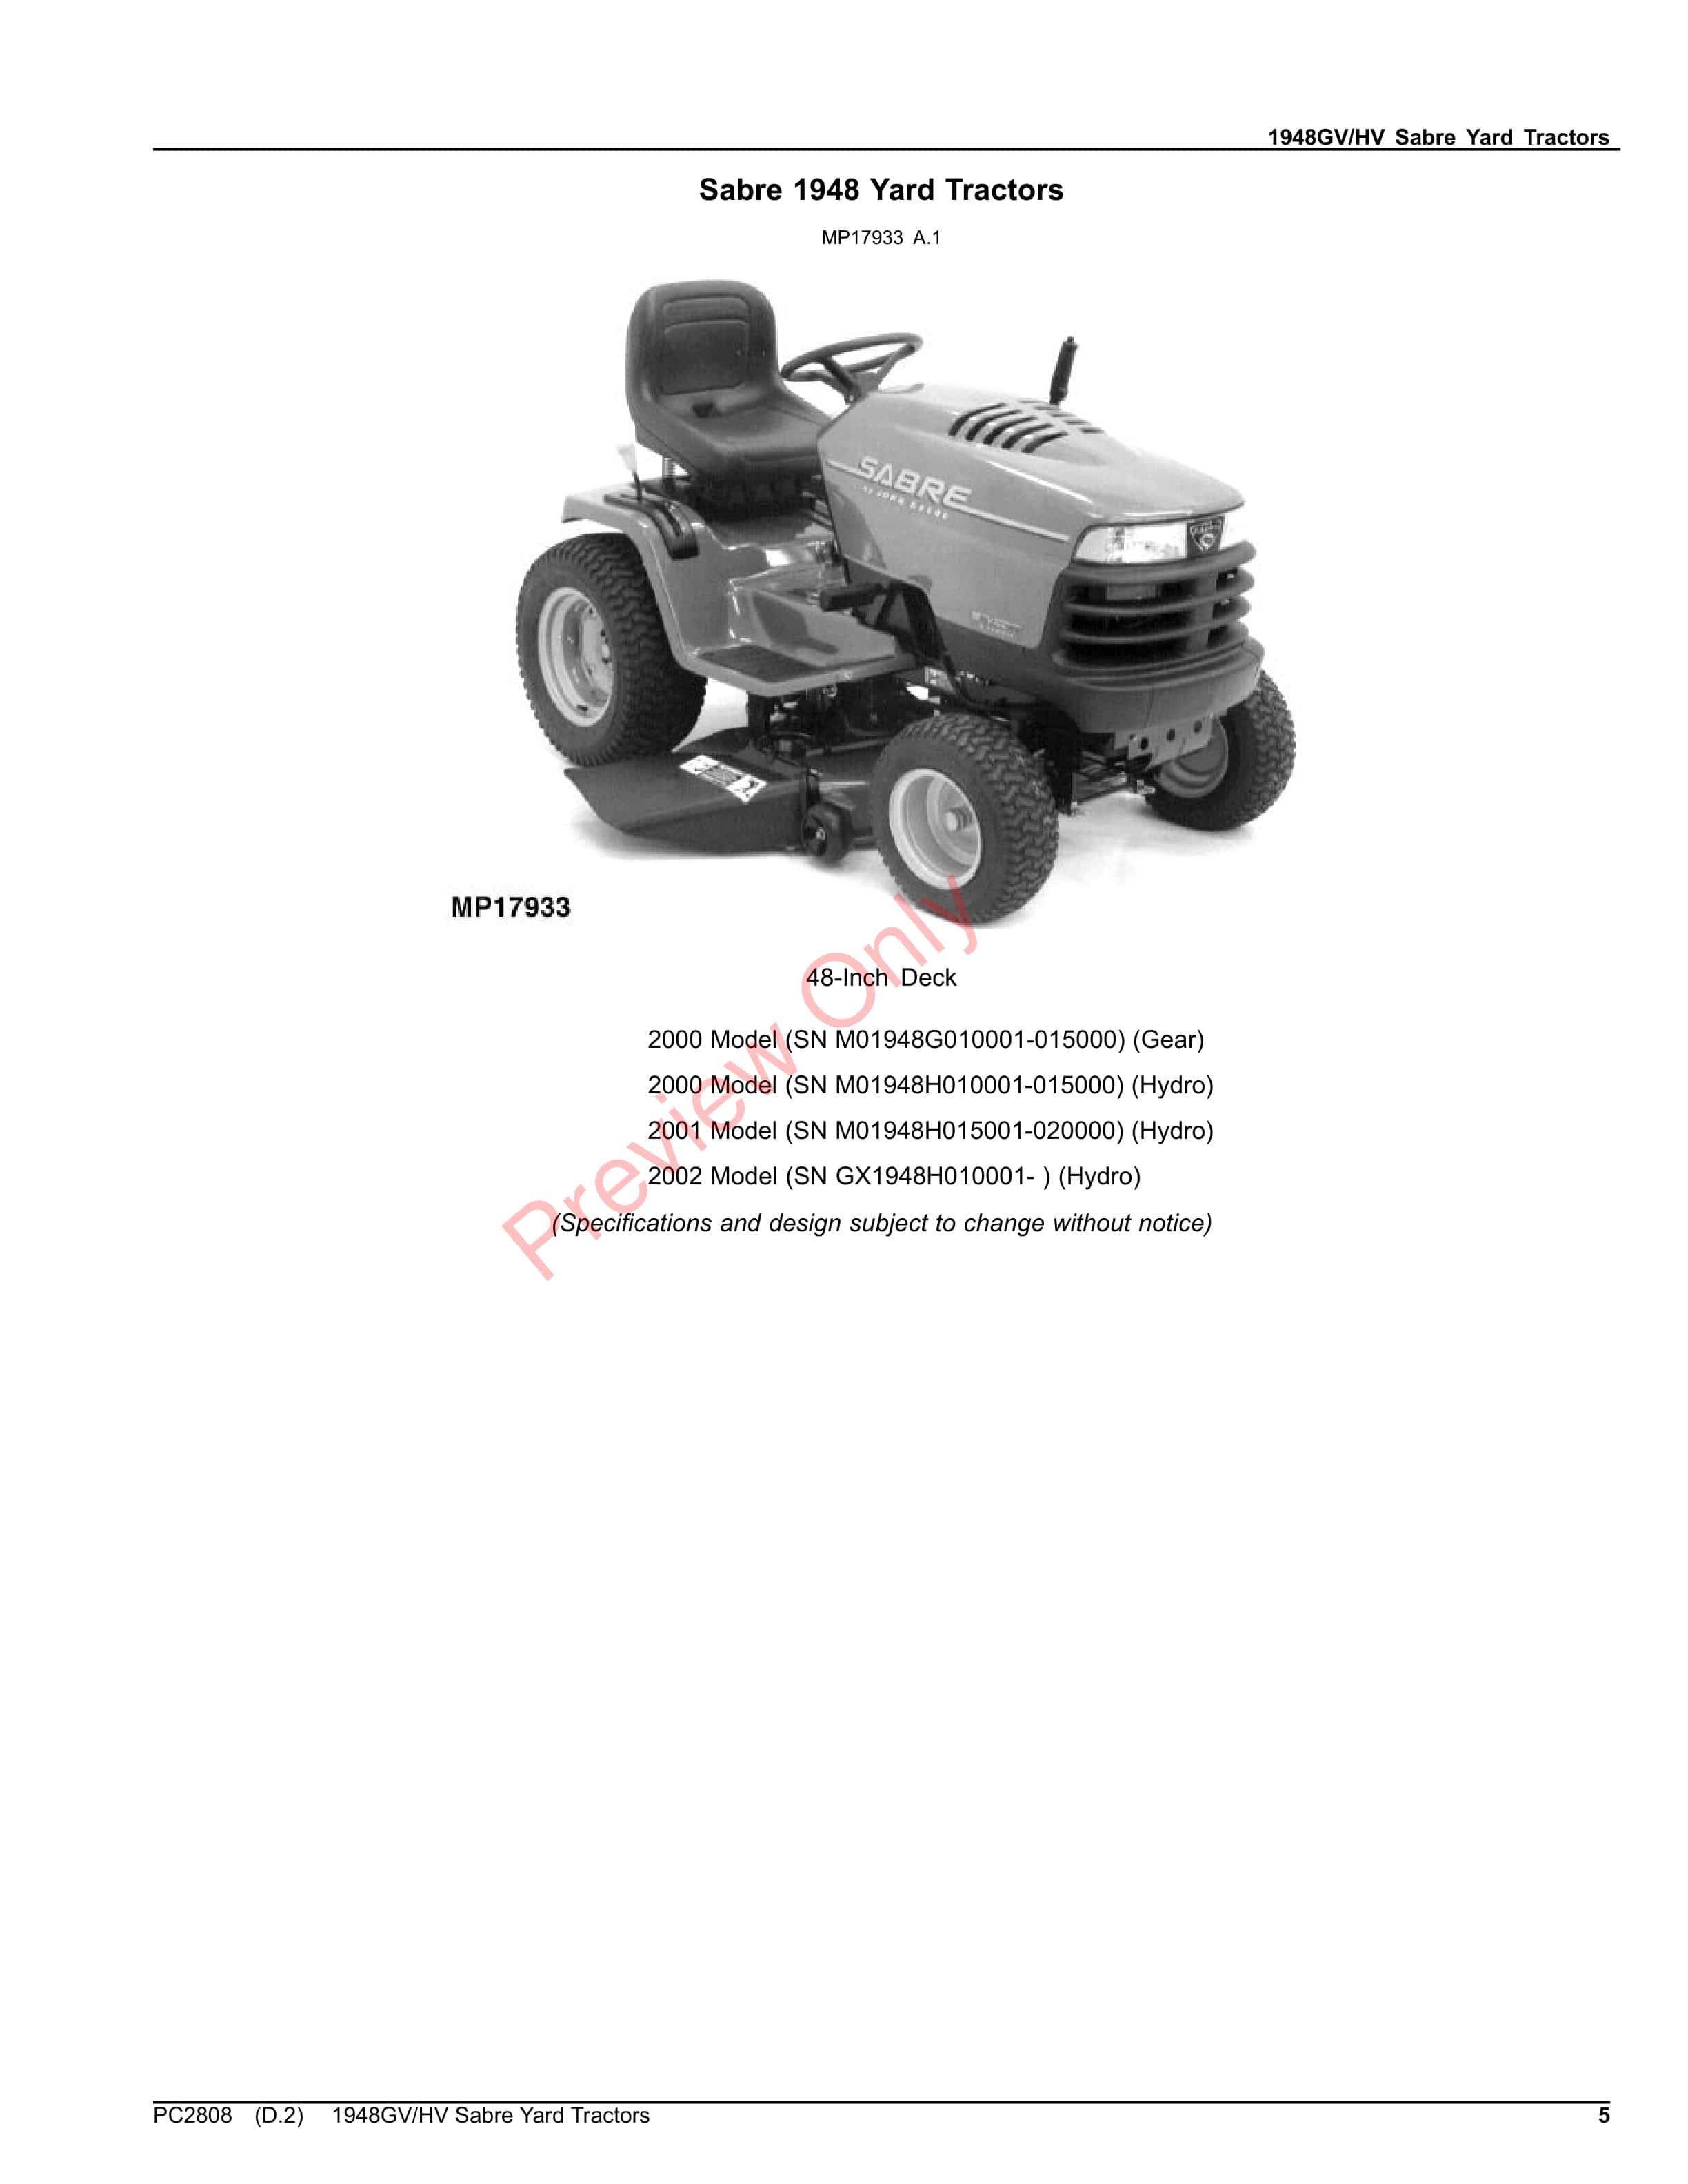 John Deere 1948GVHV SABRE YARD TRACTORS Parts Catalog PC2808 06OCT23-5